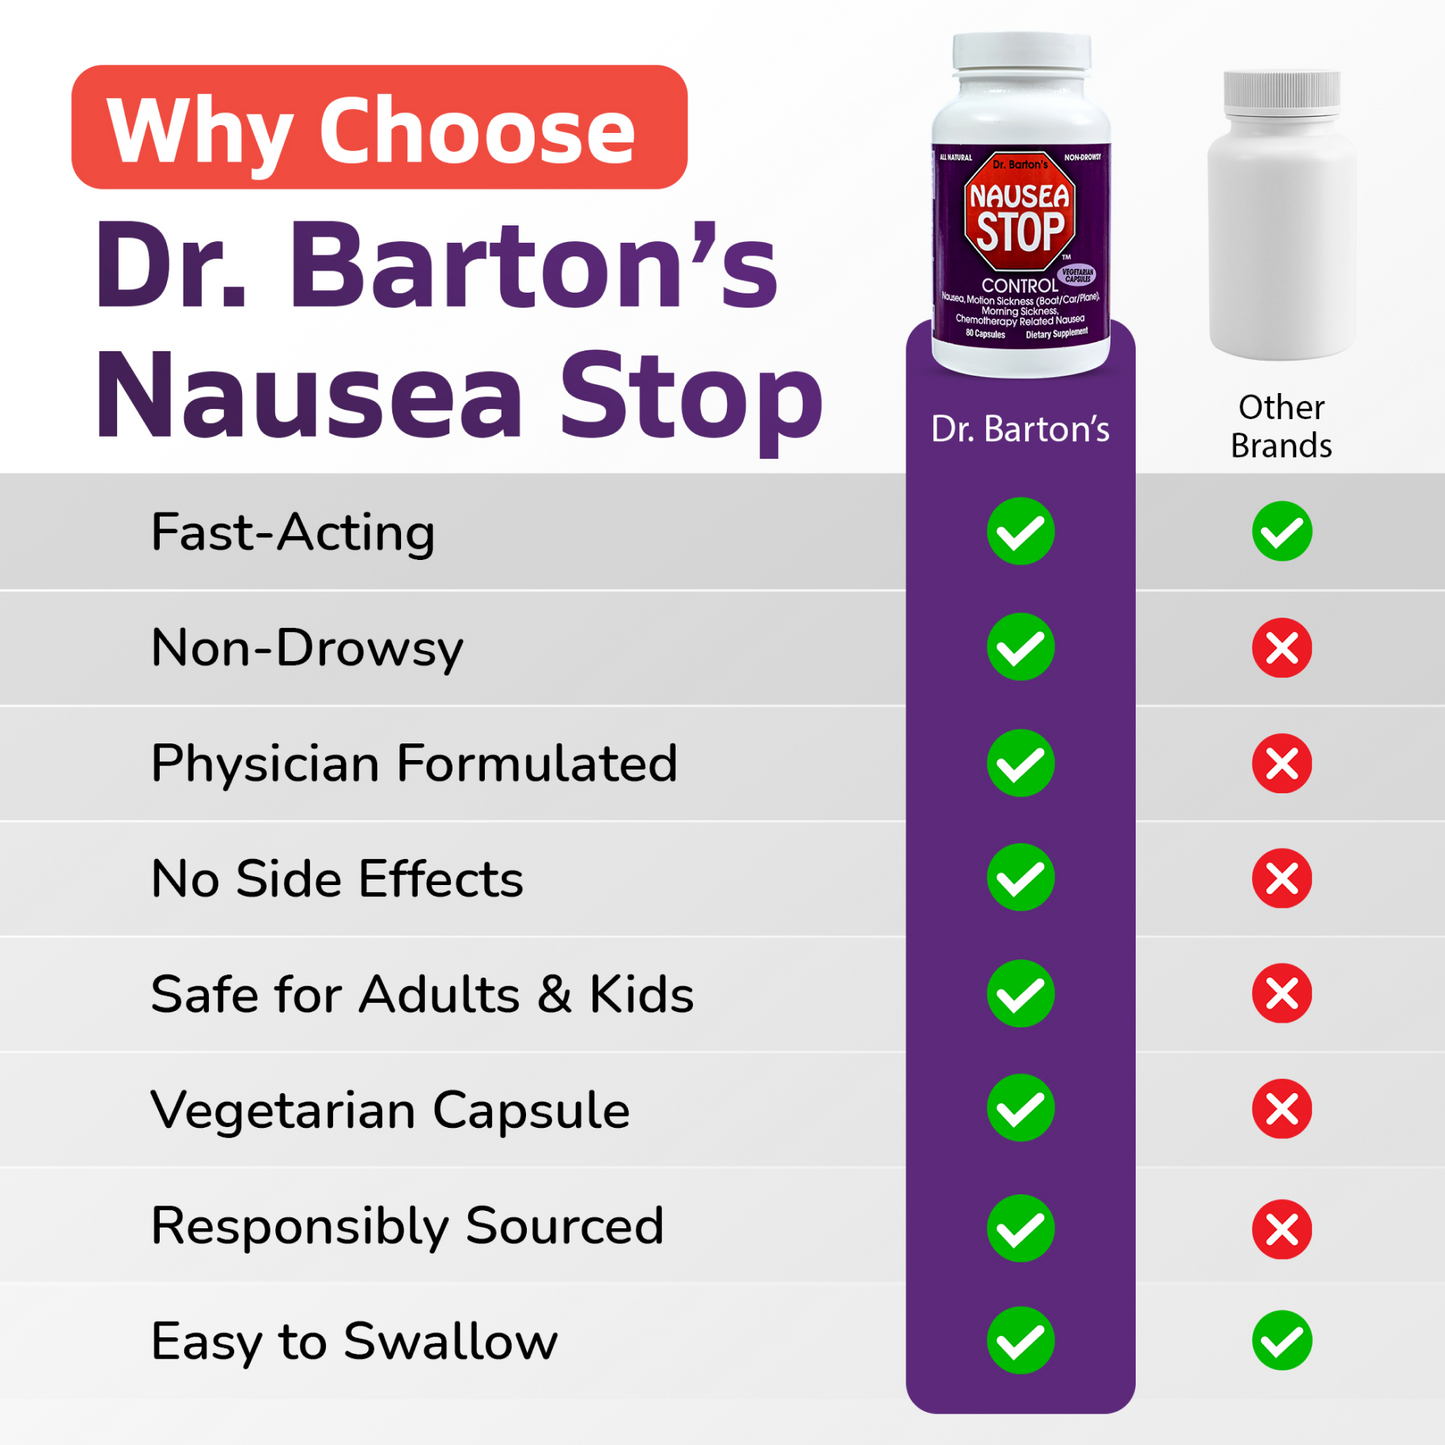 Dr. Barton's Nausea Stop®